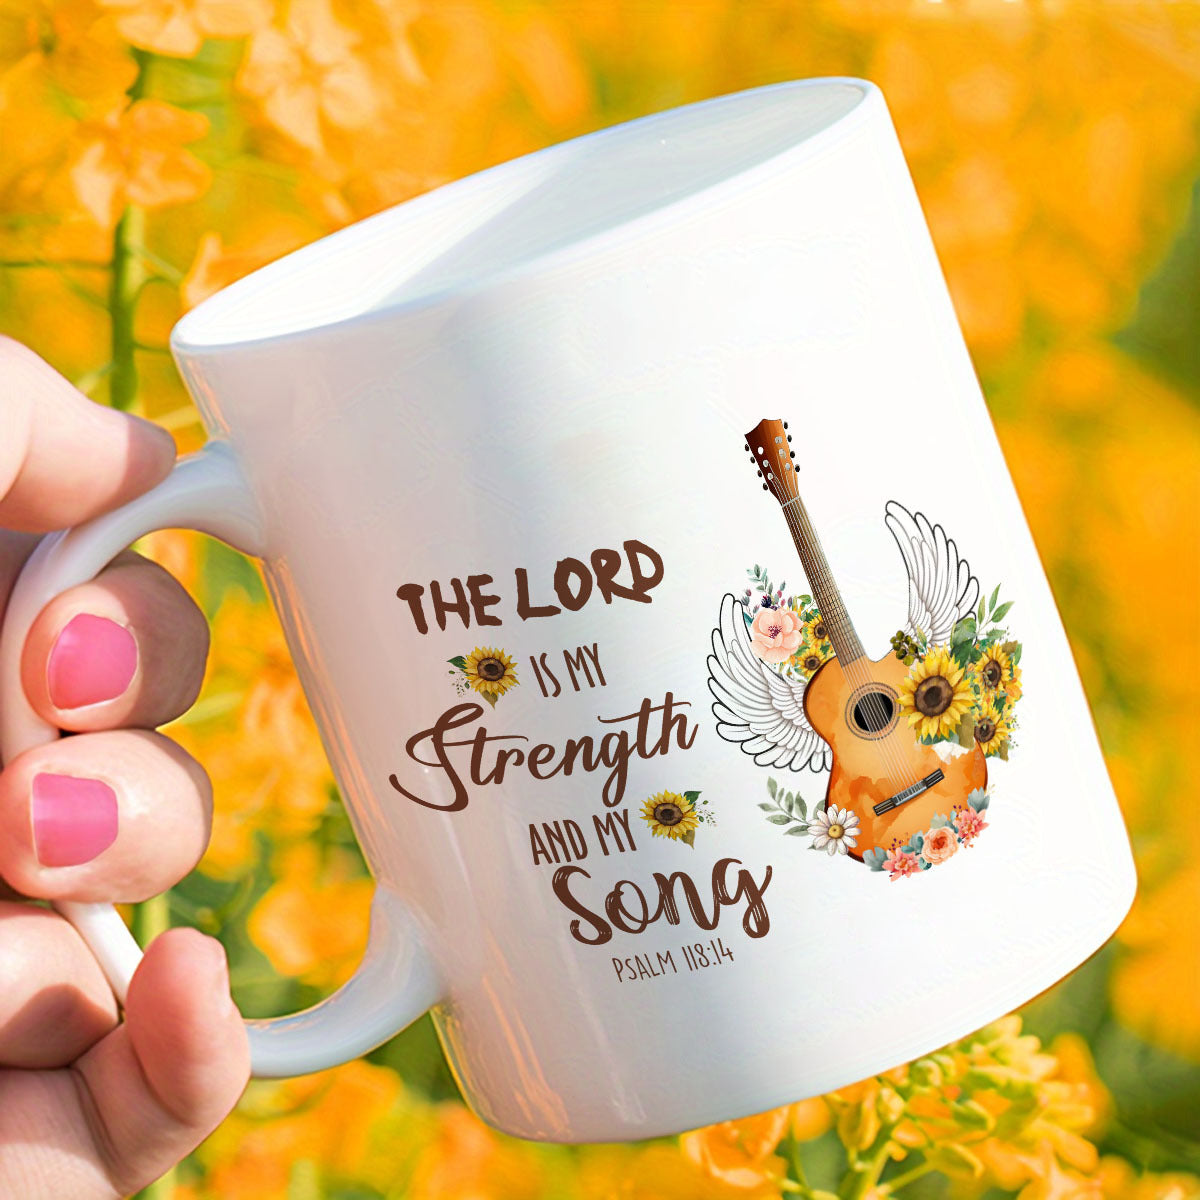 The Lord Is My Strength & Song Christian White Ceramic Mug, 11oz claimedbygoddesigns